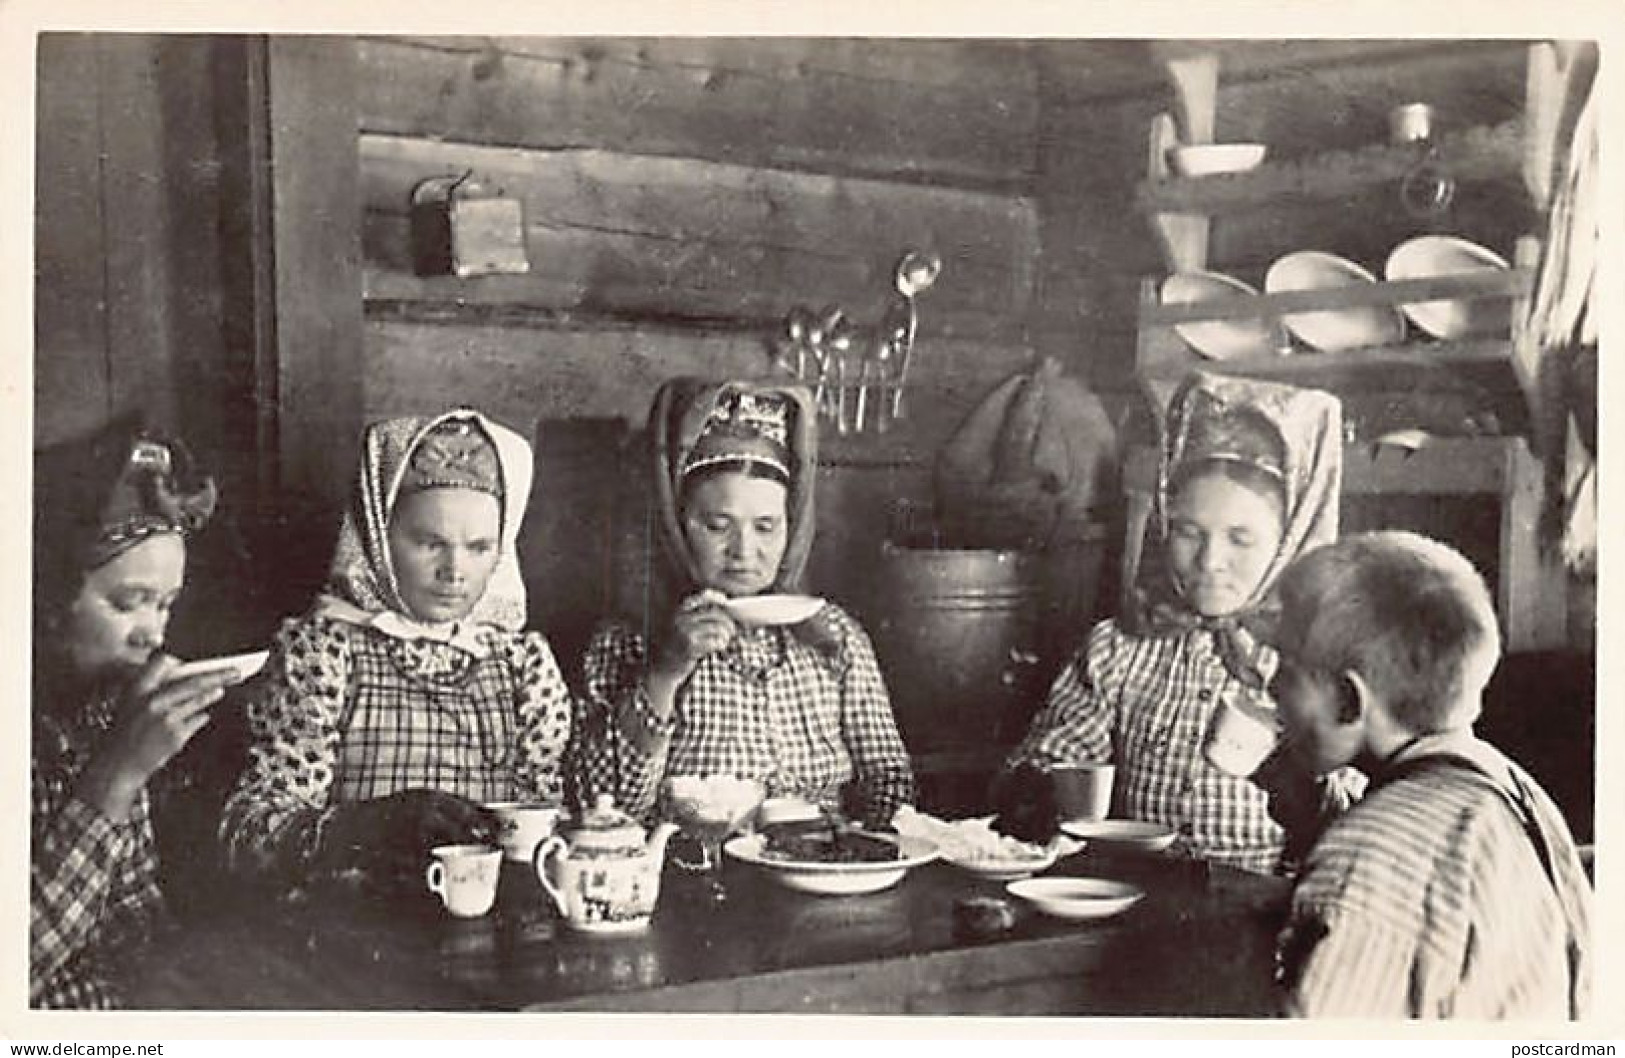 Finland - Kolttaeukot Tsajustelemassa - Skolt-women At Tea - Publ. Rovaniemen Ki - Finlande